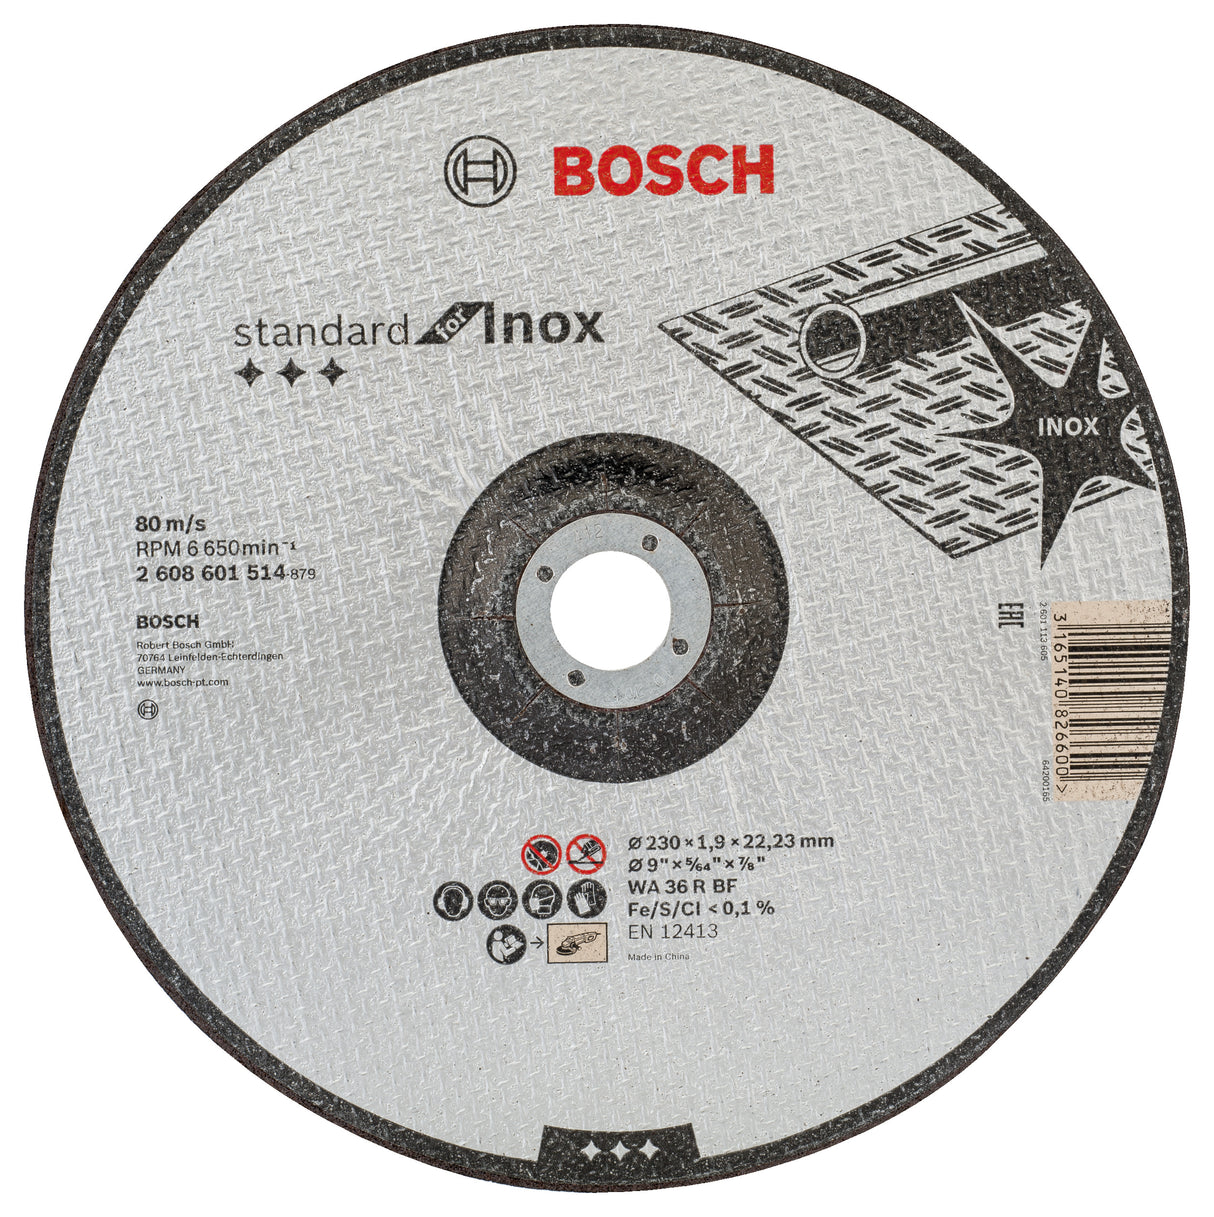 Bosch Professional Inox Cutting Disc with Depressed Centre - WA 36 R BF, 230mm x 22.23mm x 1.9mm